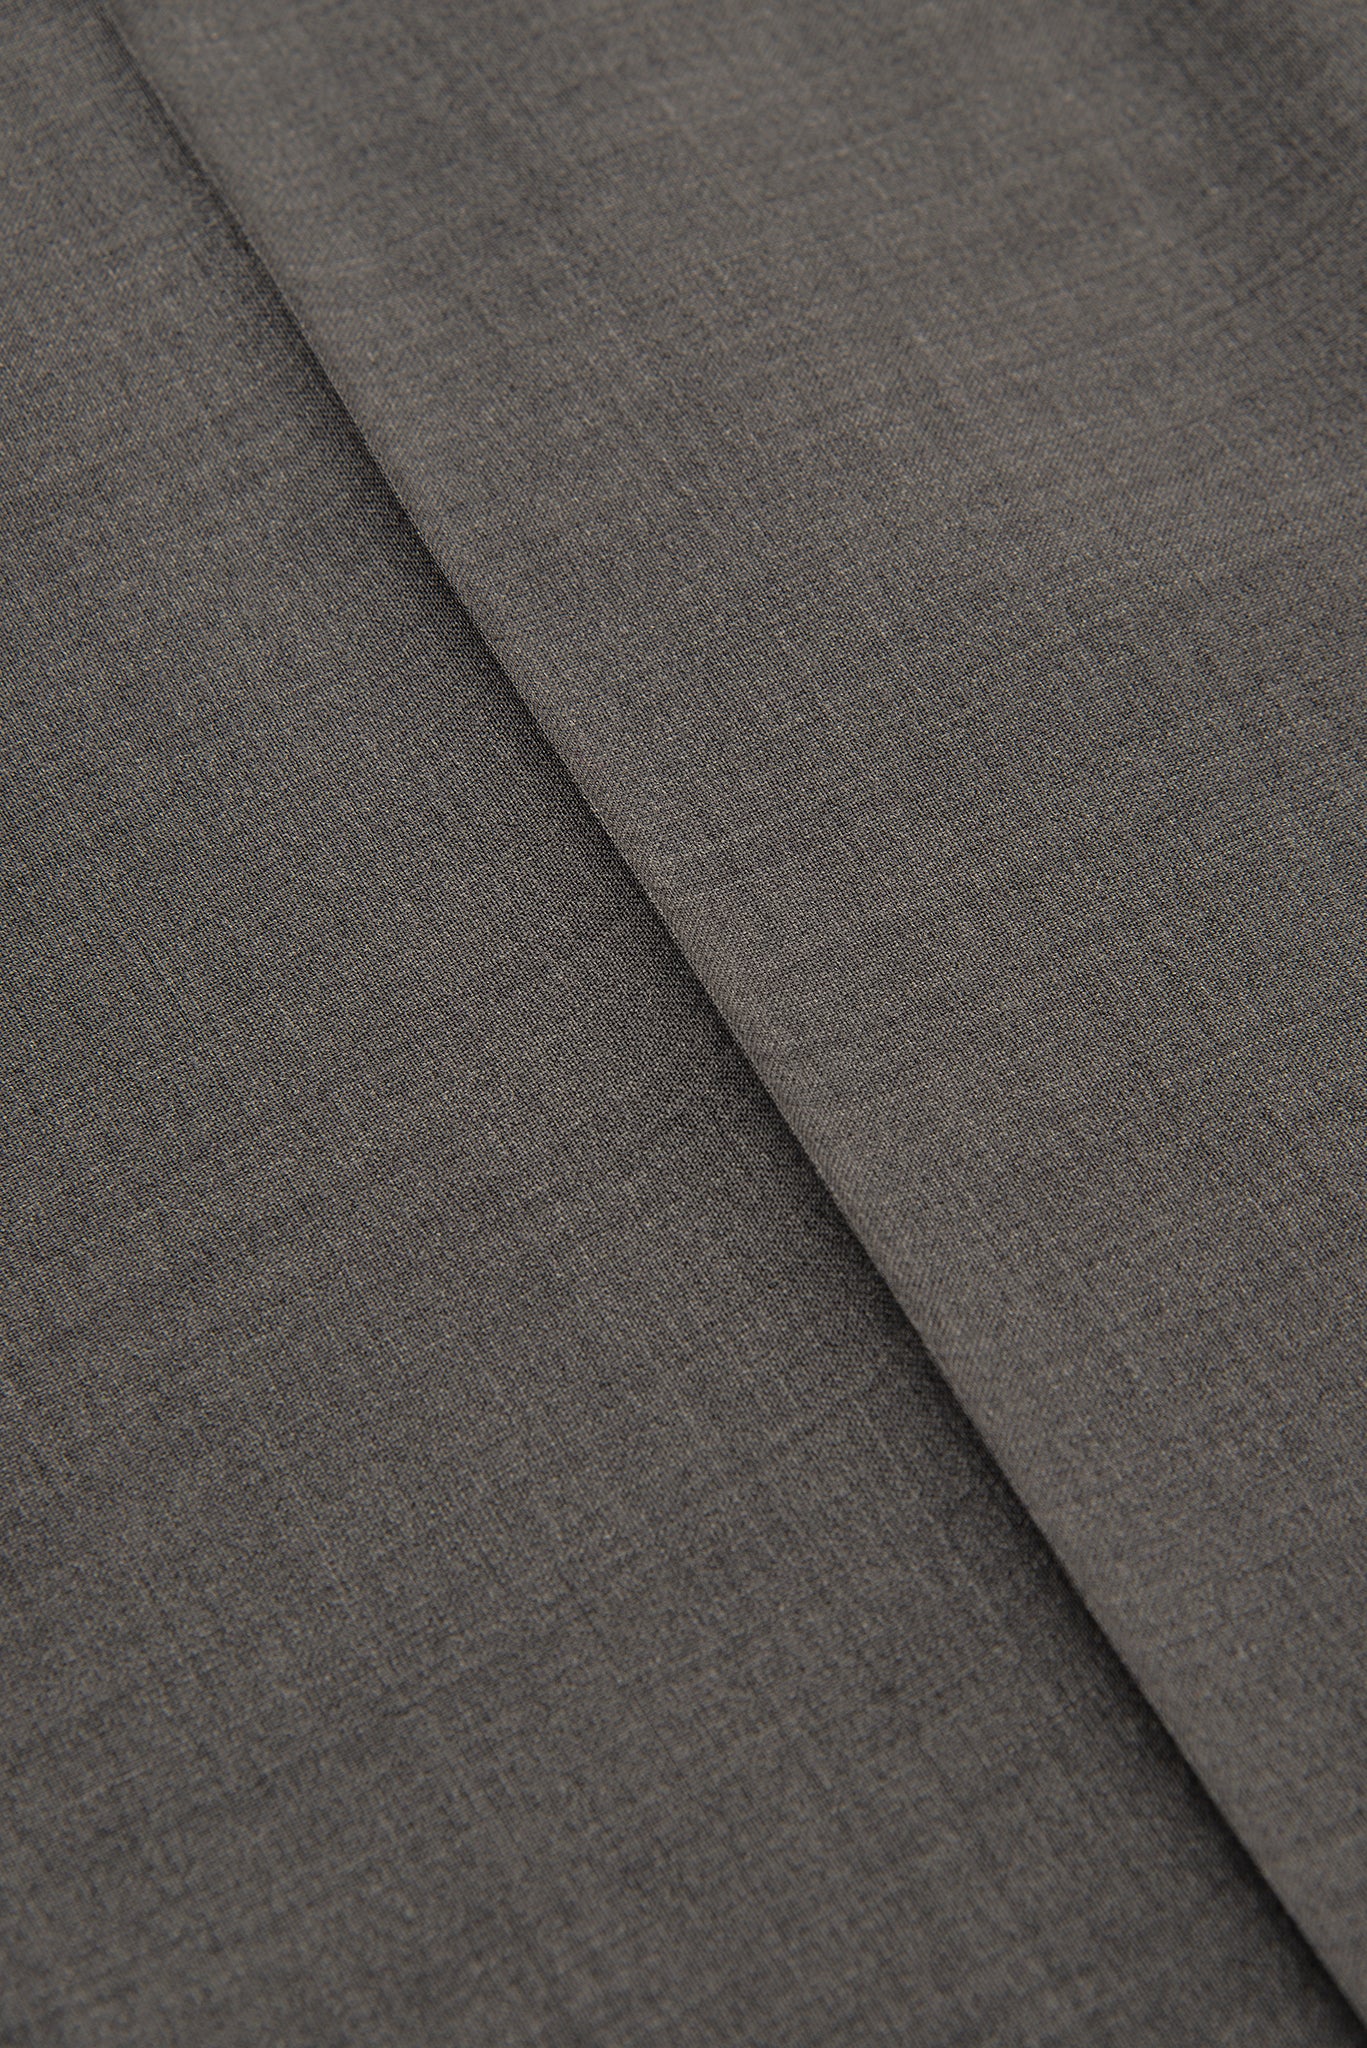 Boris Chino Pants Classic Light Wool Super 100' (charcoal grey)